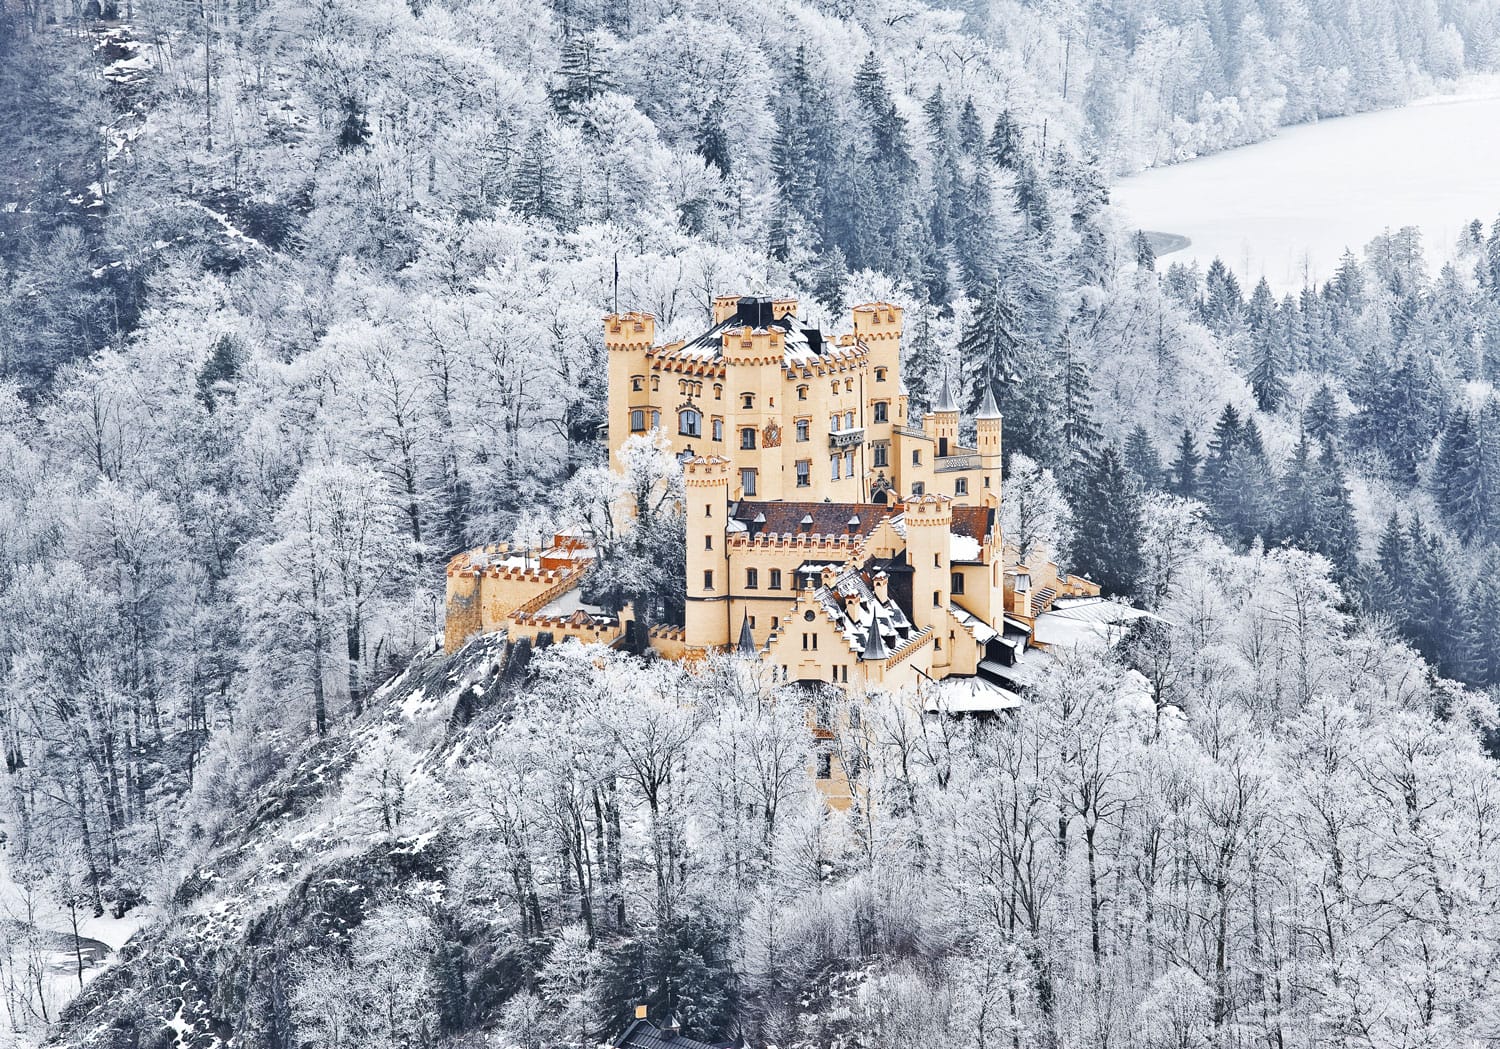 he castle of Hohenschwangau in Bavaria, Germany. 